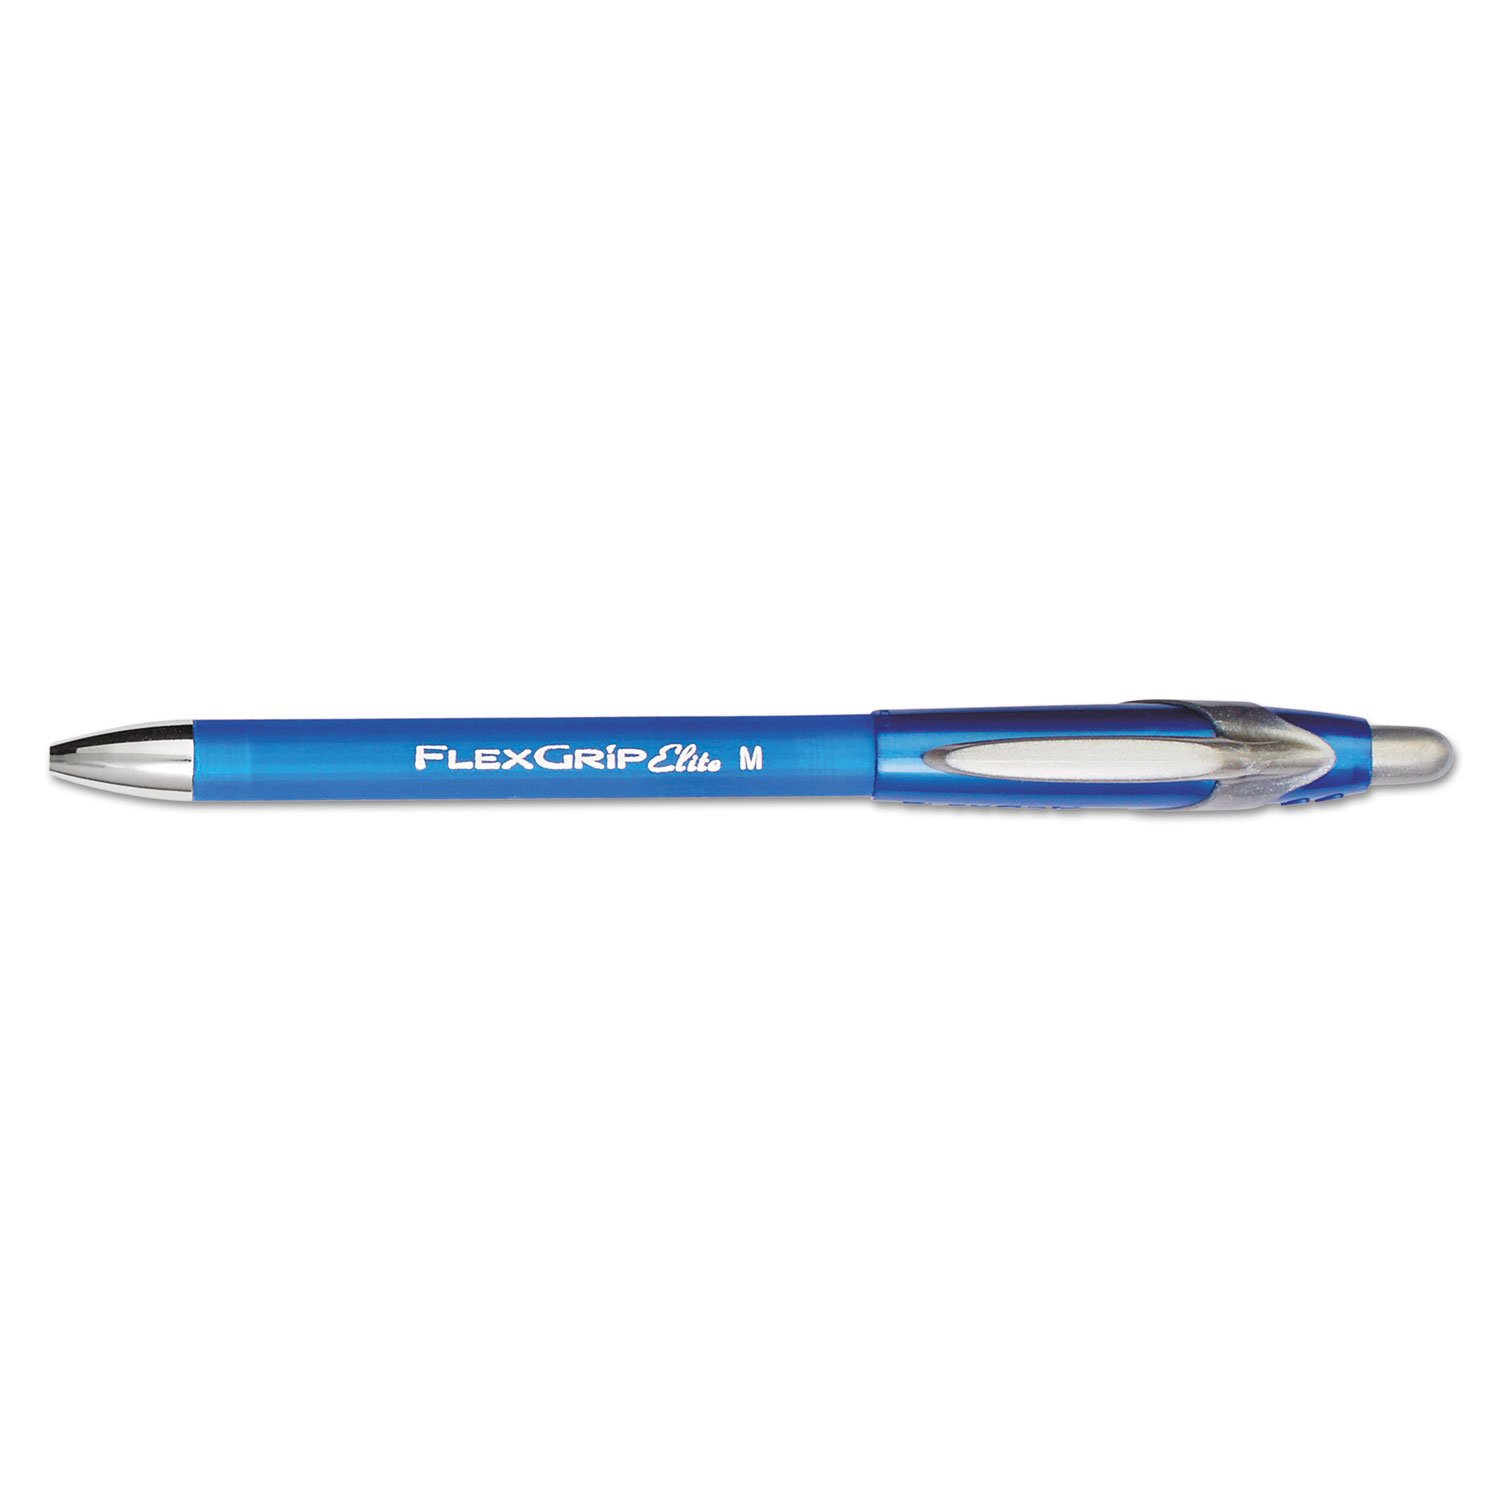 Paper-Mate Paper Mate 85581 Flexgrip Elite Ballpoint Retractable Pen, Blue Ink, Medium, Dozen